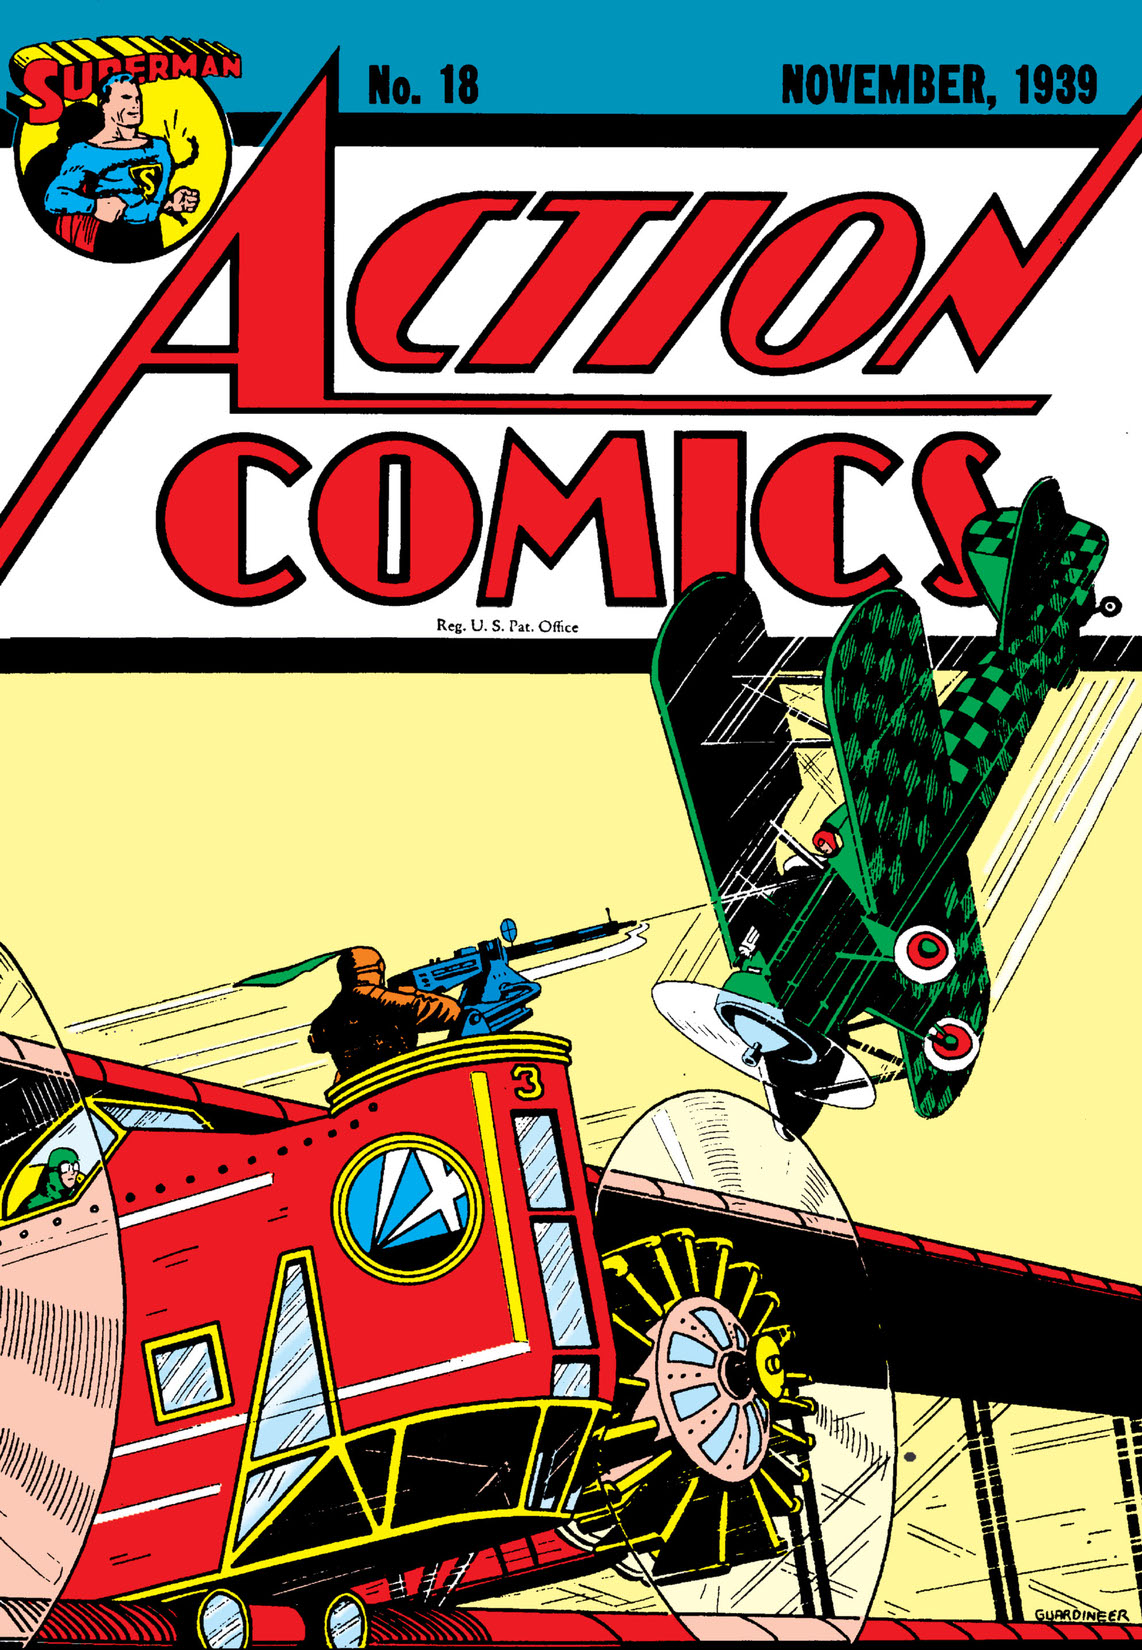 Action Comics (1938-) #18 preview images